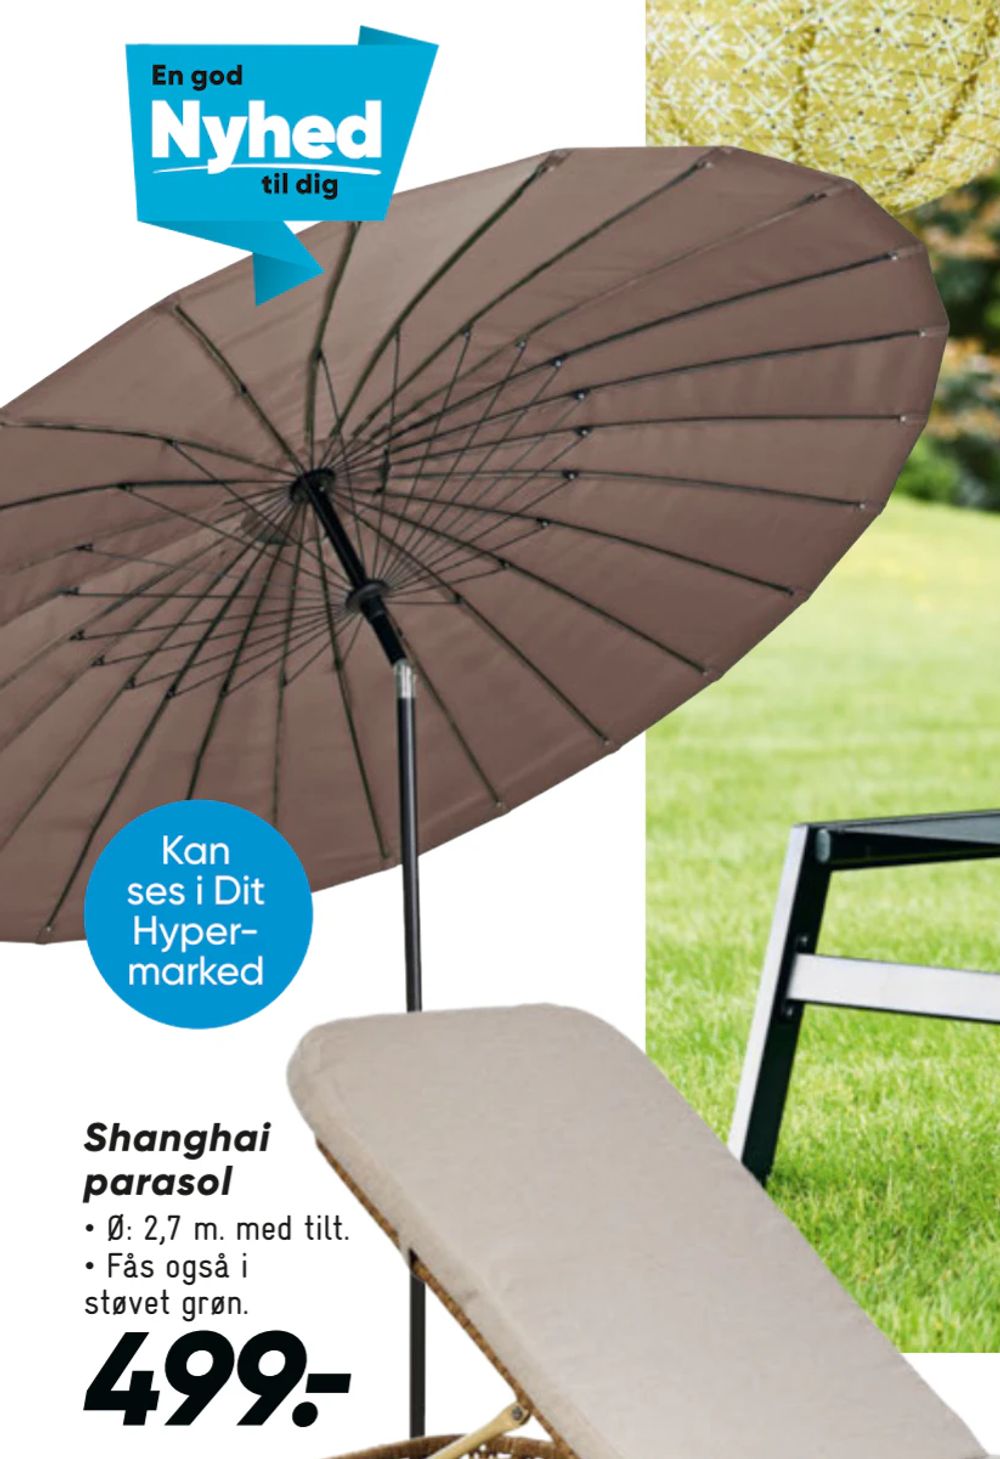 Tilbud på Shanghai parasol fra Bilka til 499 kr.